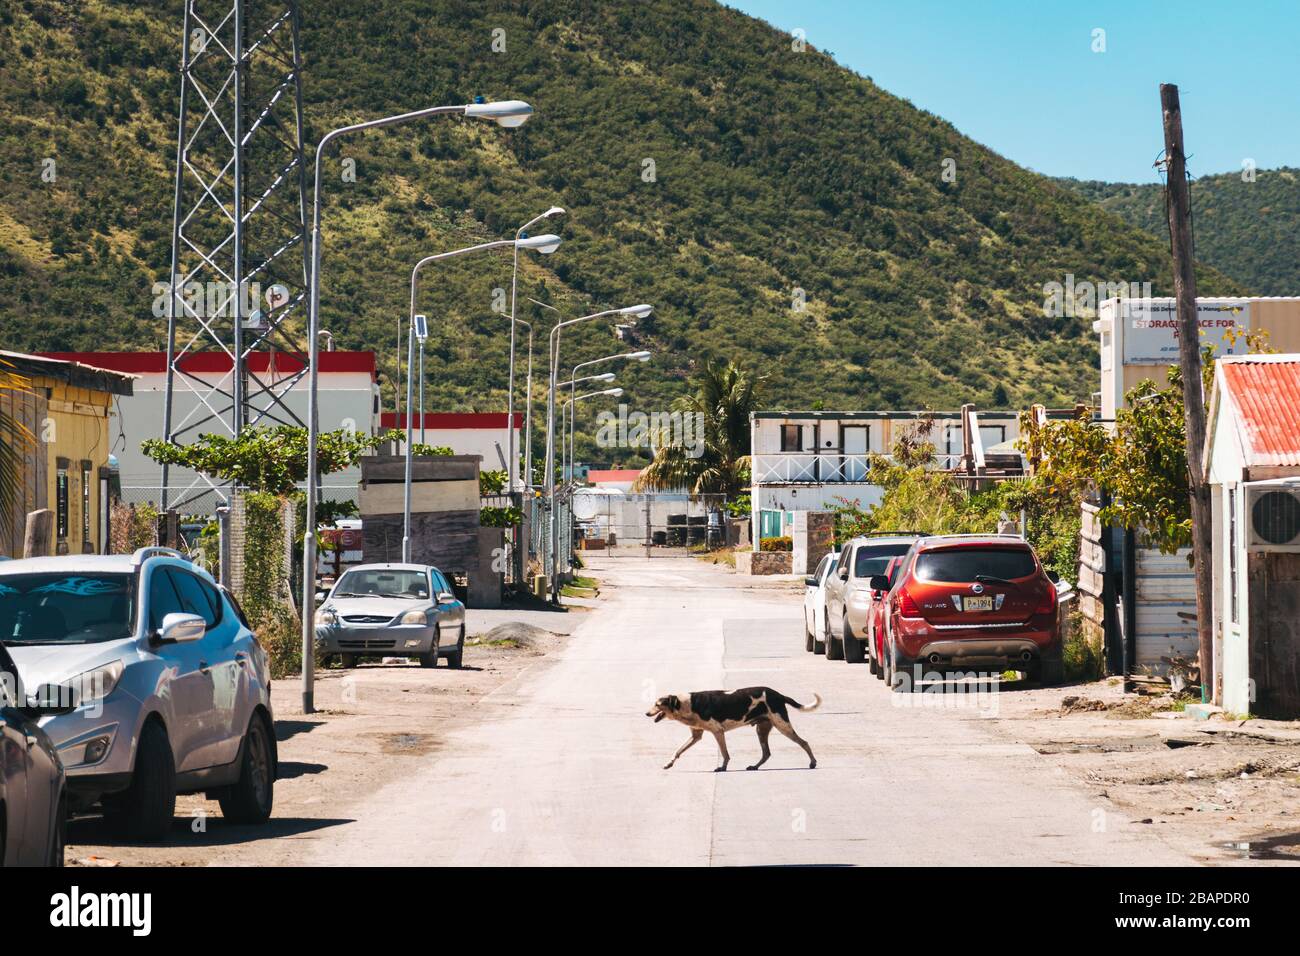 A dog crosses an urban street in outer Philipsburg, St. Maarten Stock Photo